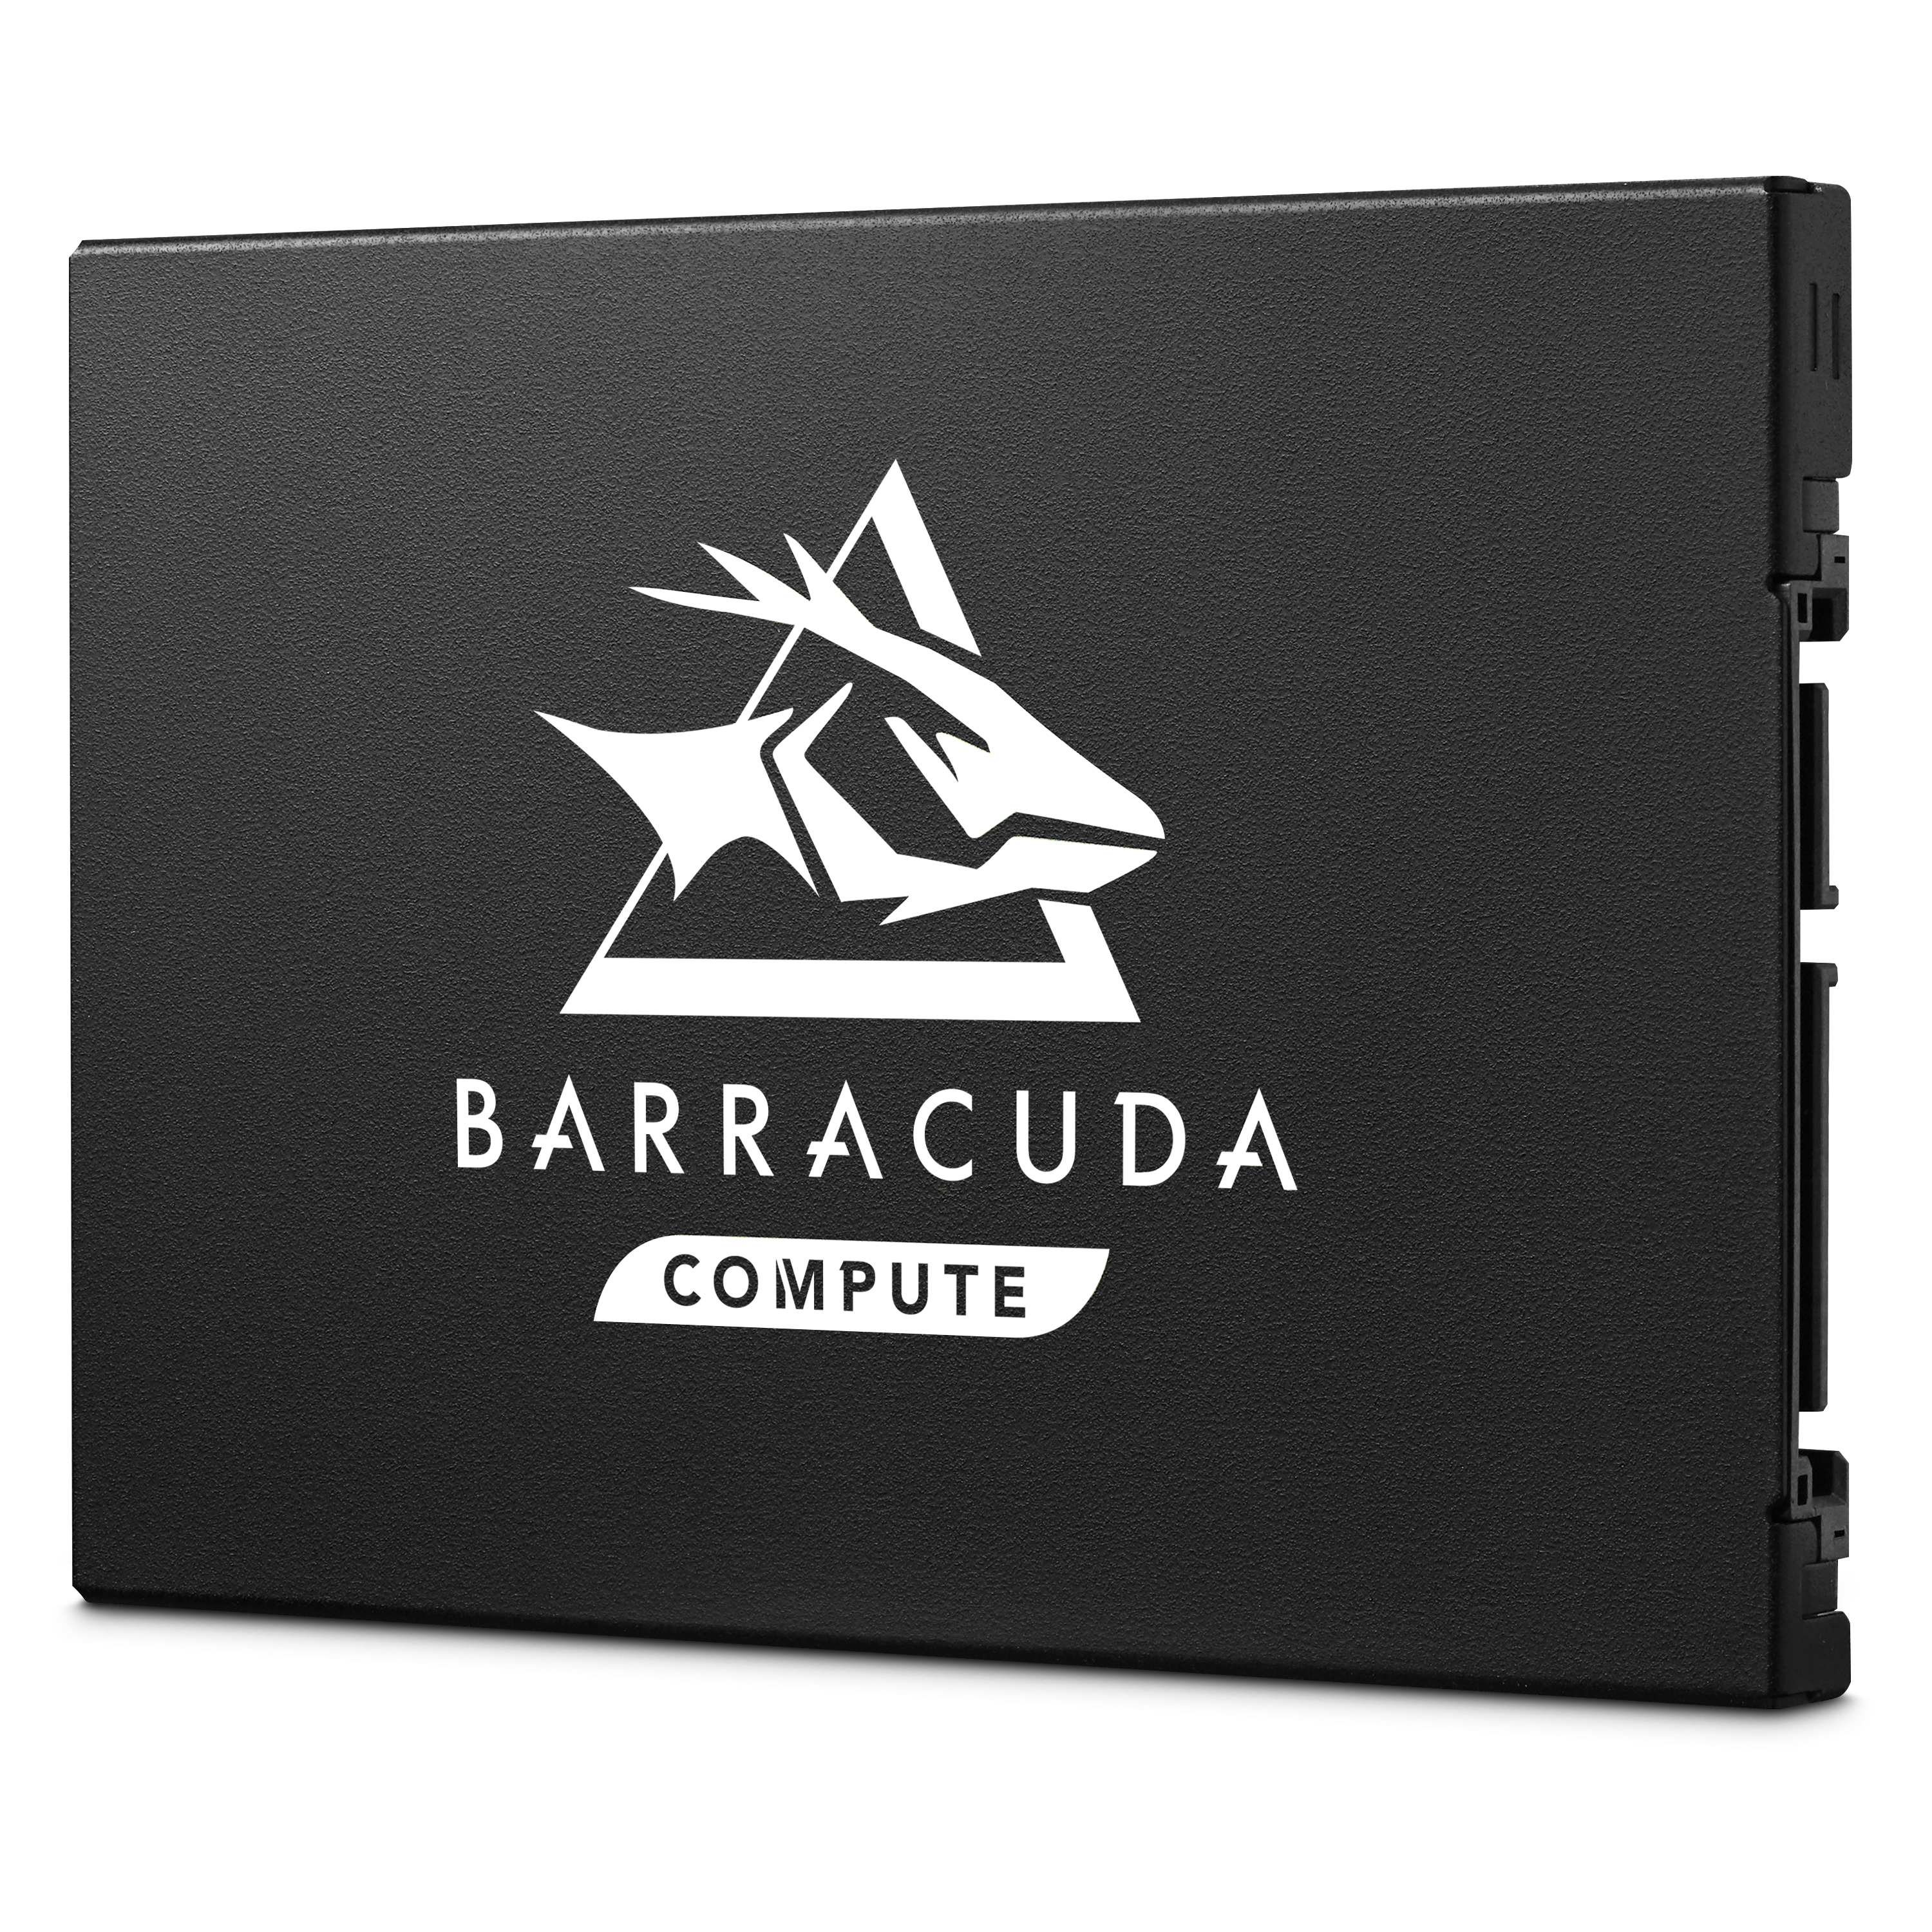 Disque SSD Barracuda Q1 480 Go Seagate